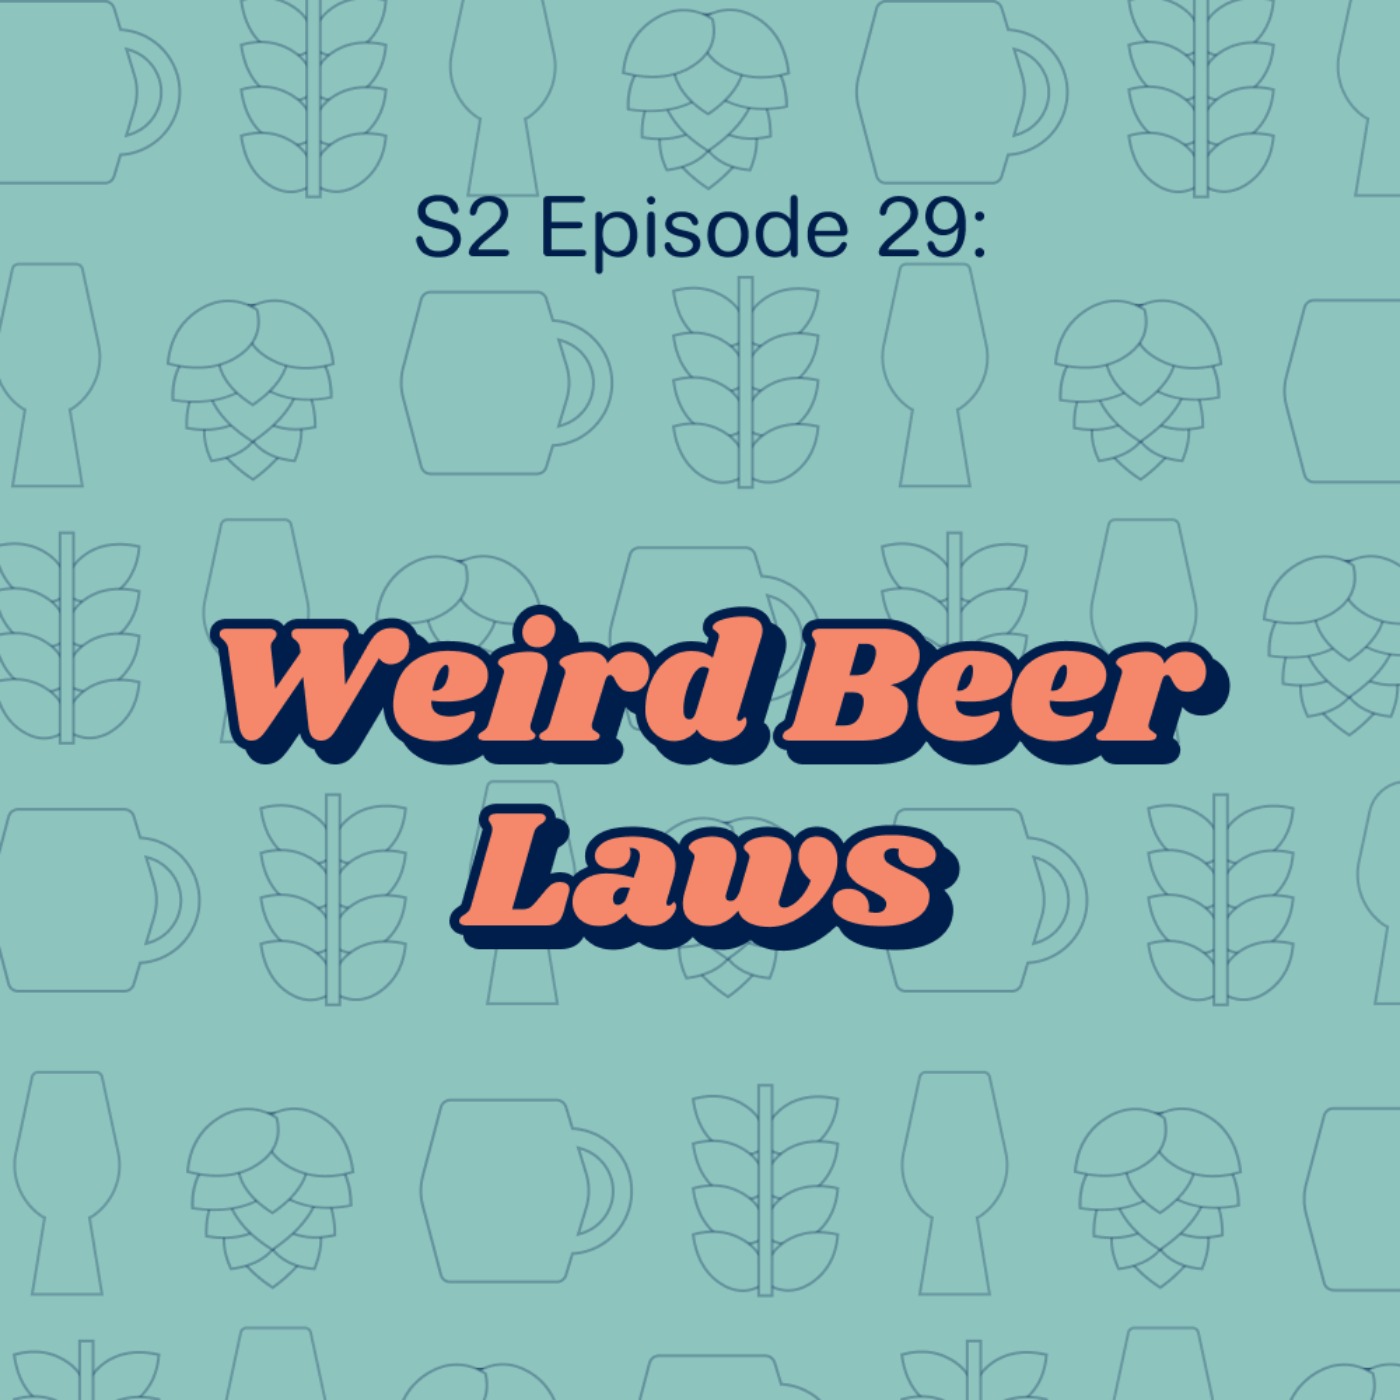 Weird Beer Laws